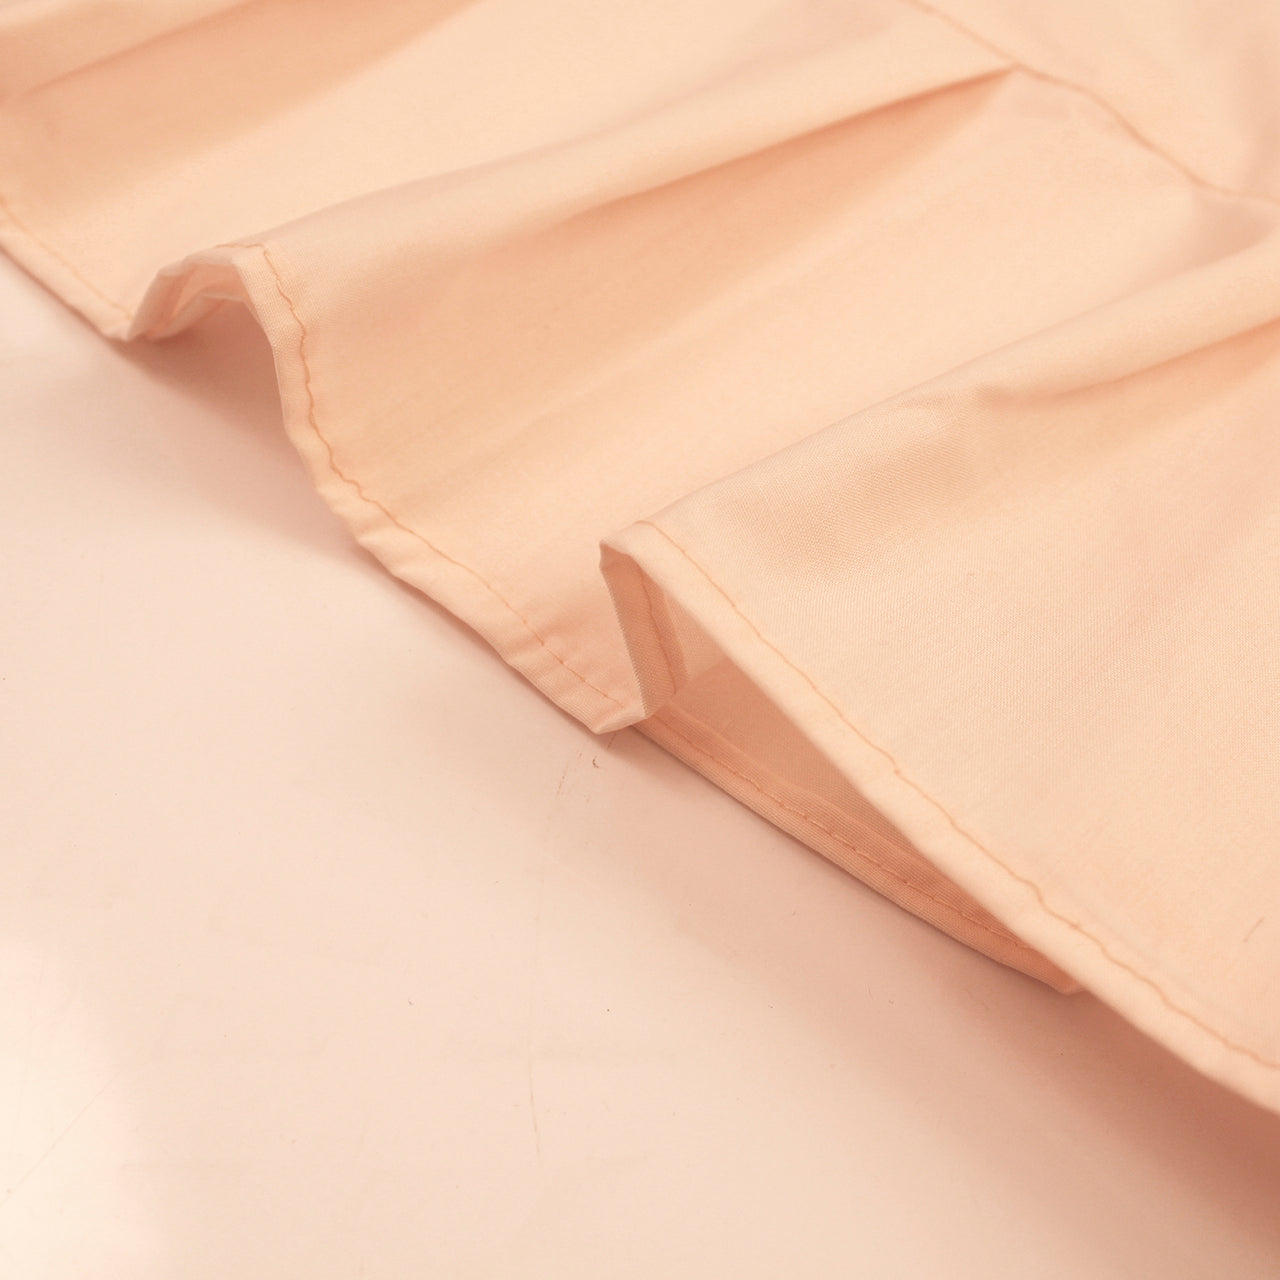 Peach - Sari (Saree) Petticoat - Available in S, M, L & XL - Underskirts For Sari's